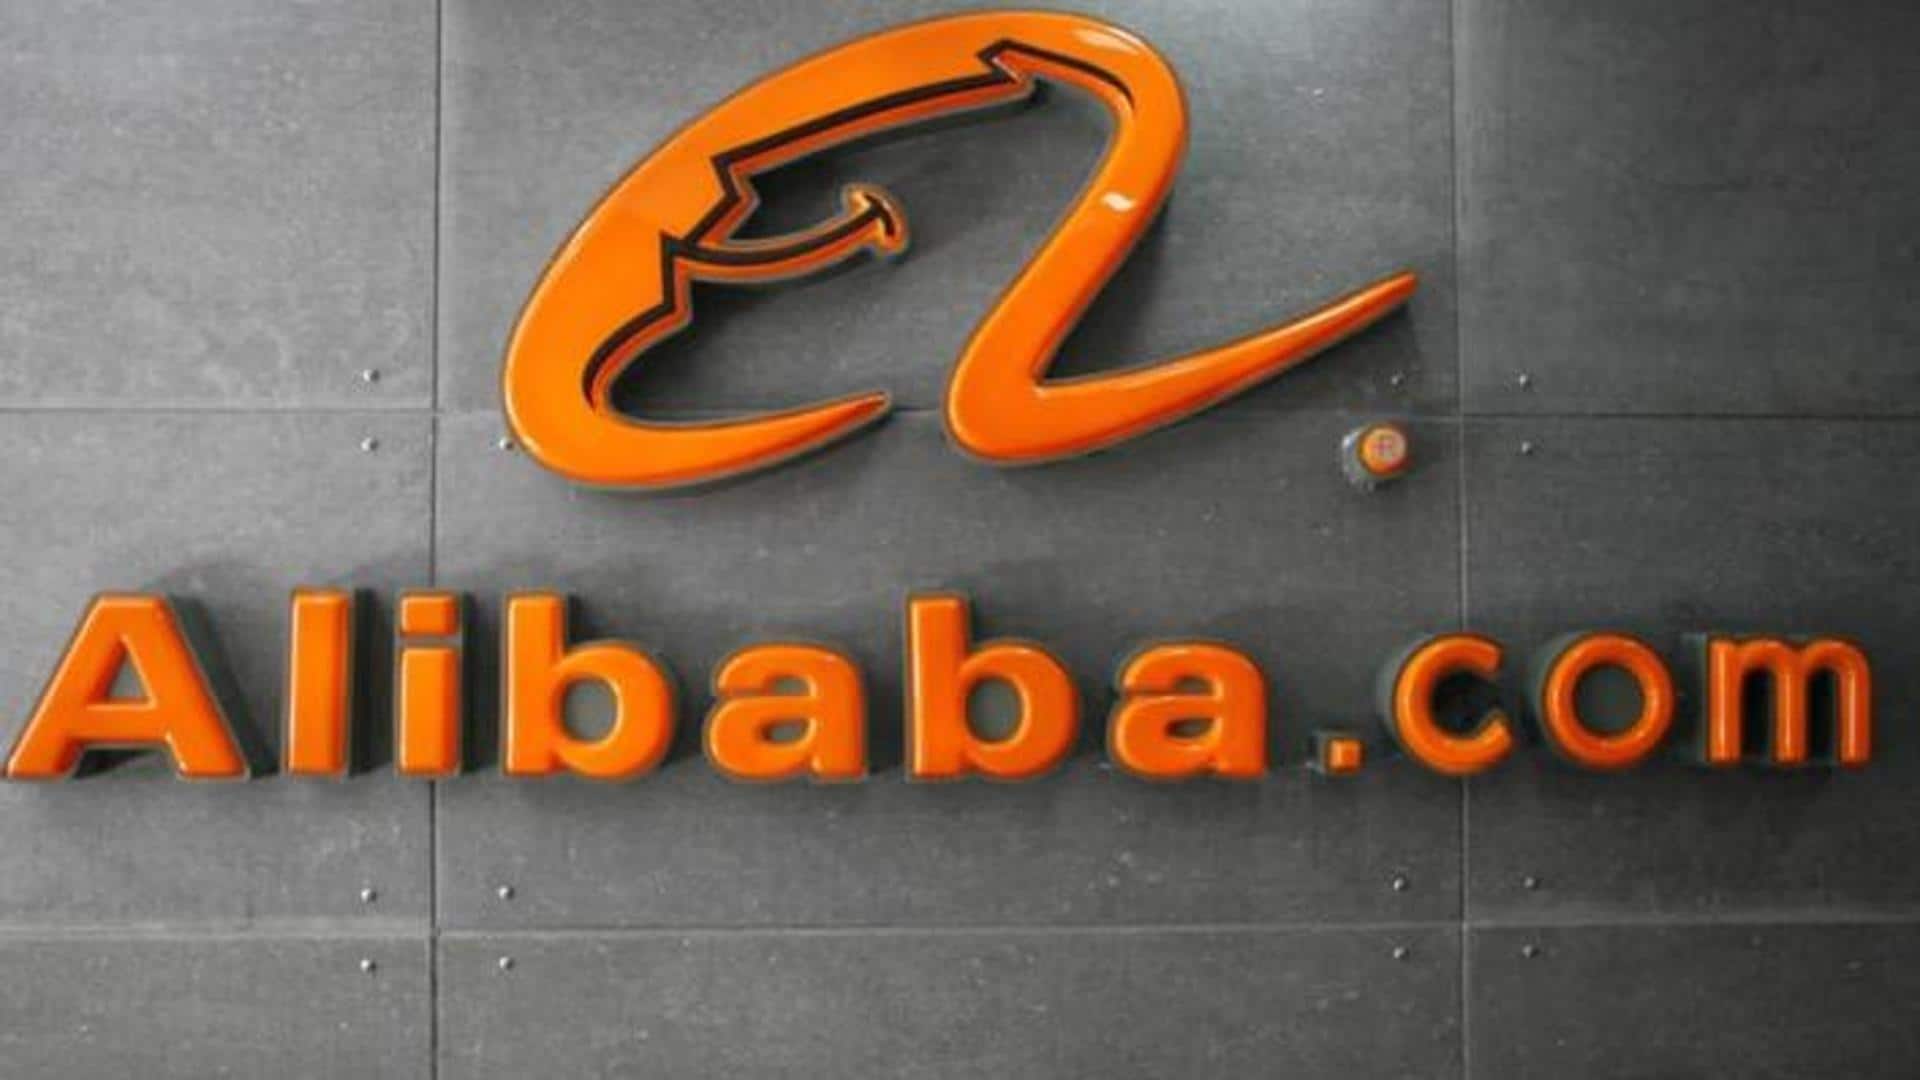 Alibaba unveils AI image generator that takes on Midjourney, DALL-E